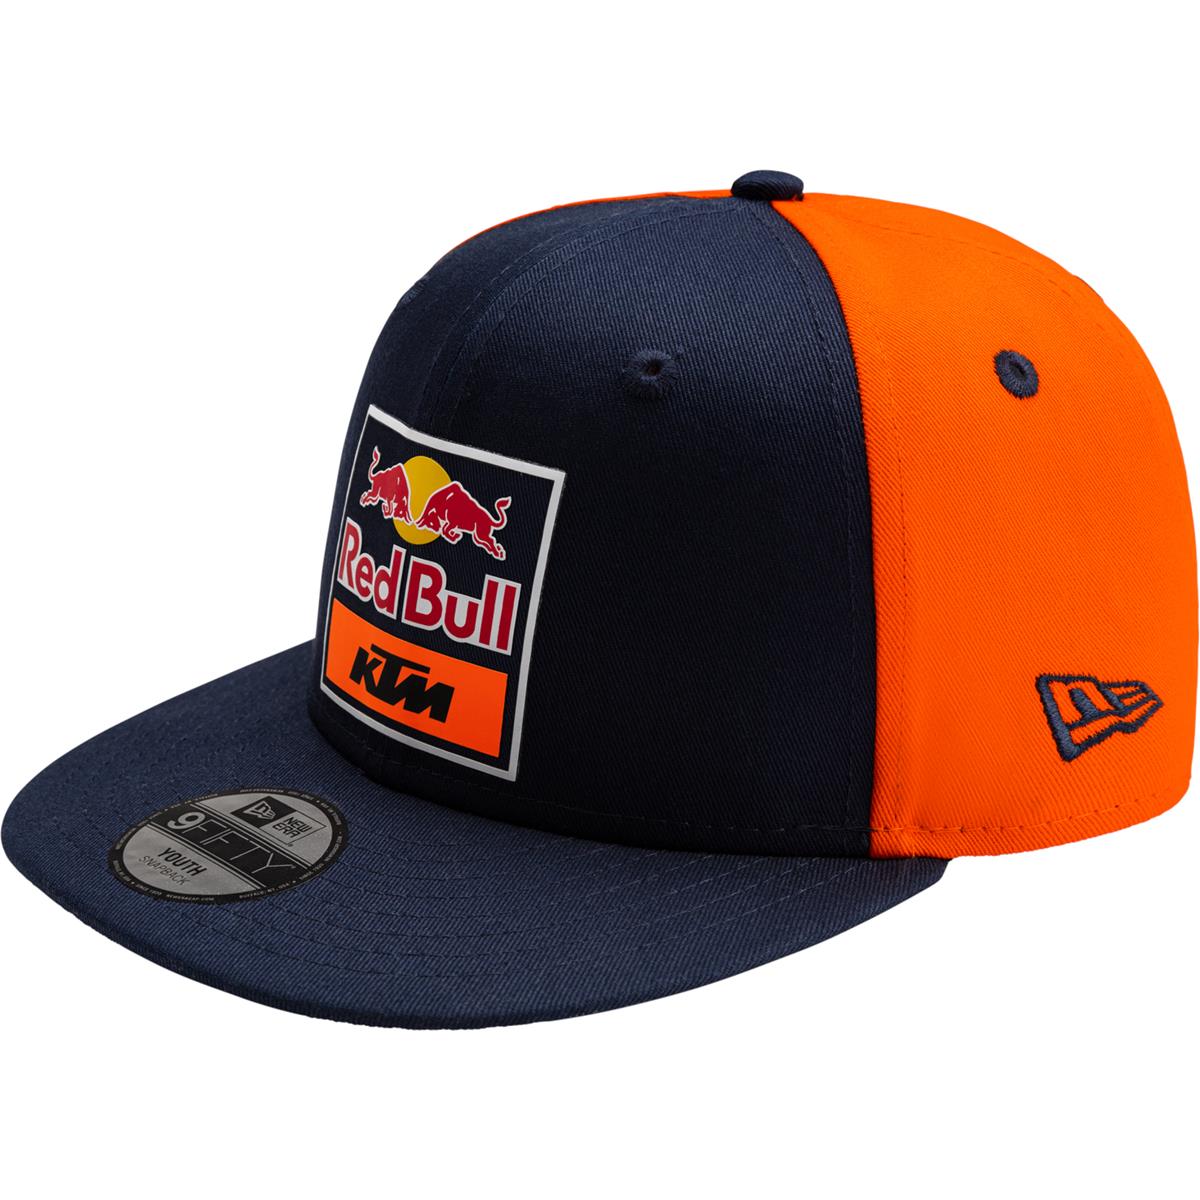 Red Bull Bimbo Cappellino Snapback KTM Official Teamline Replica - lat - Navy/Arancione